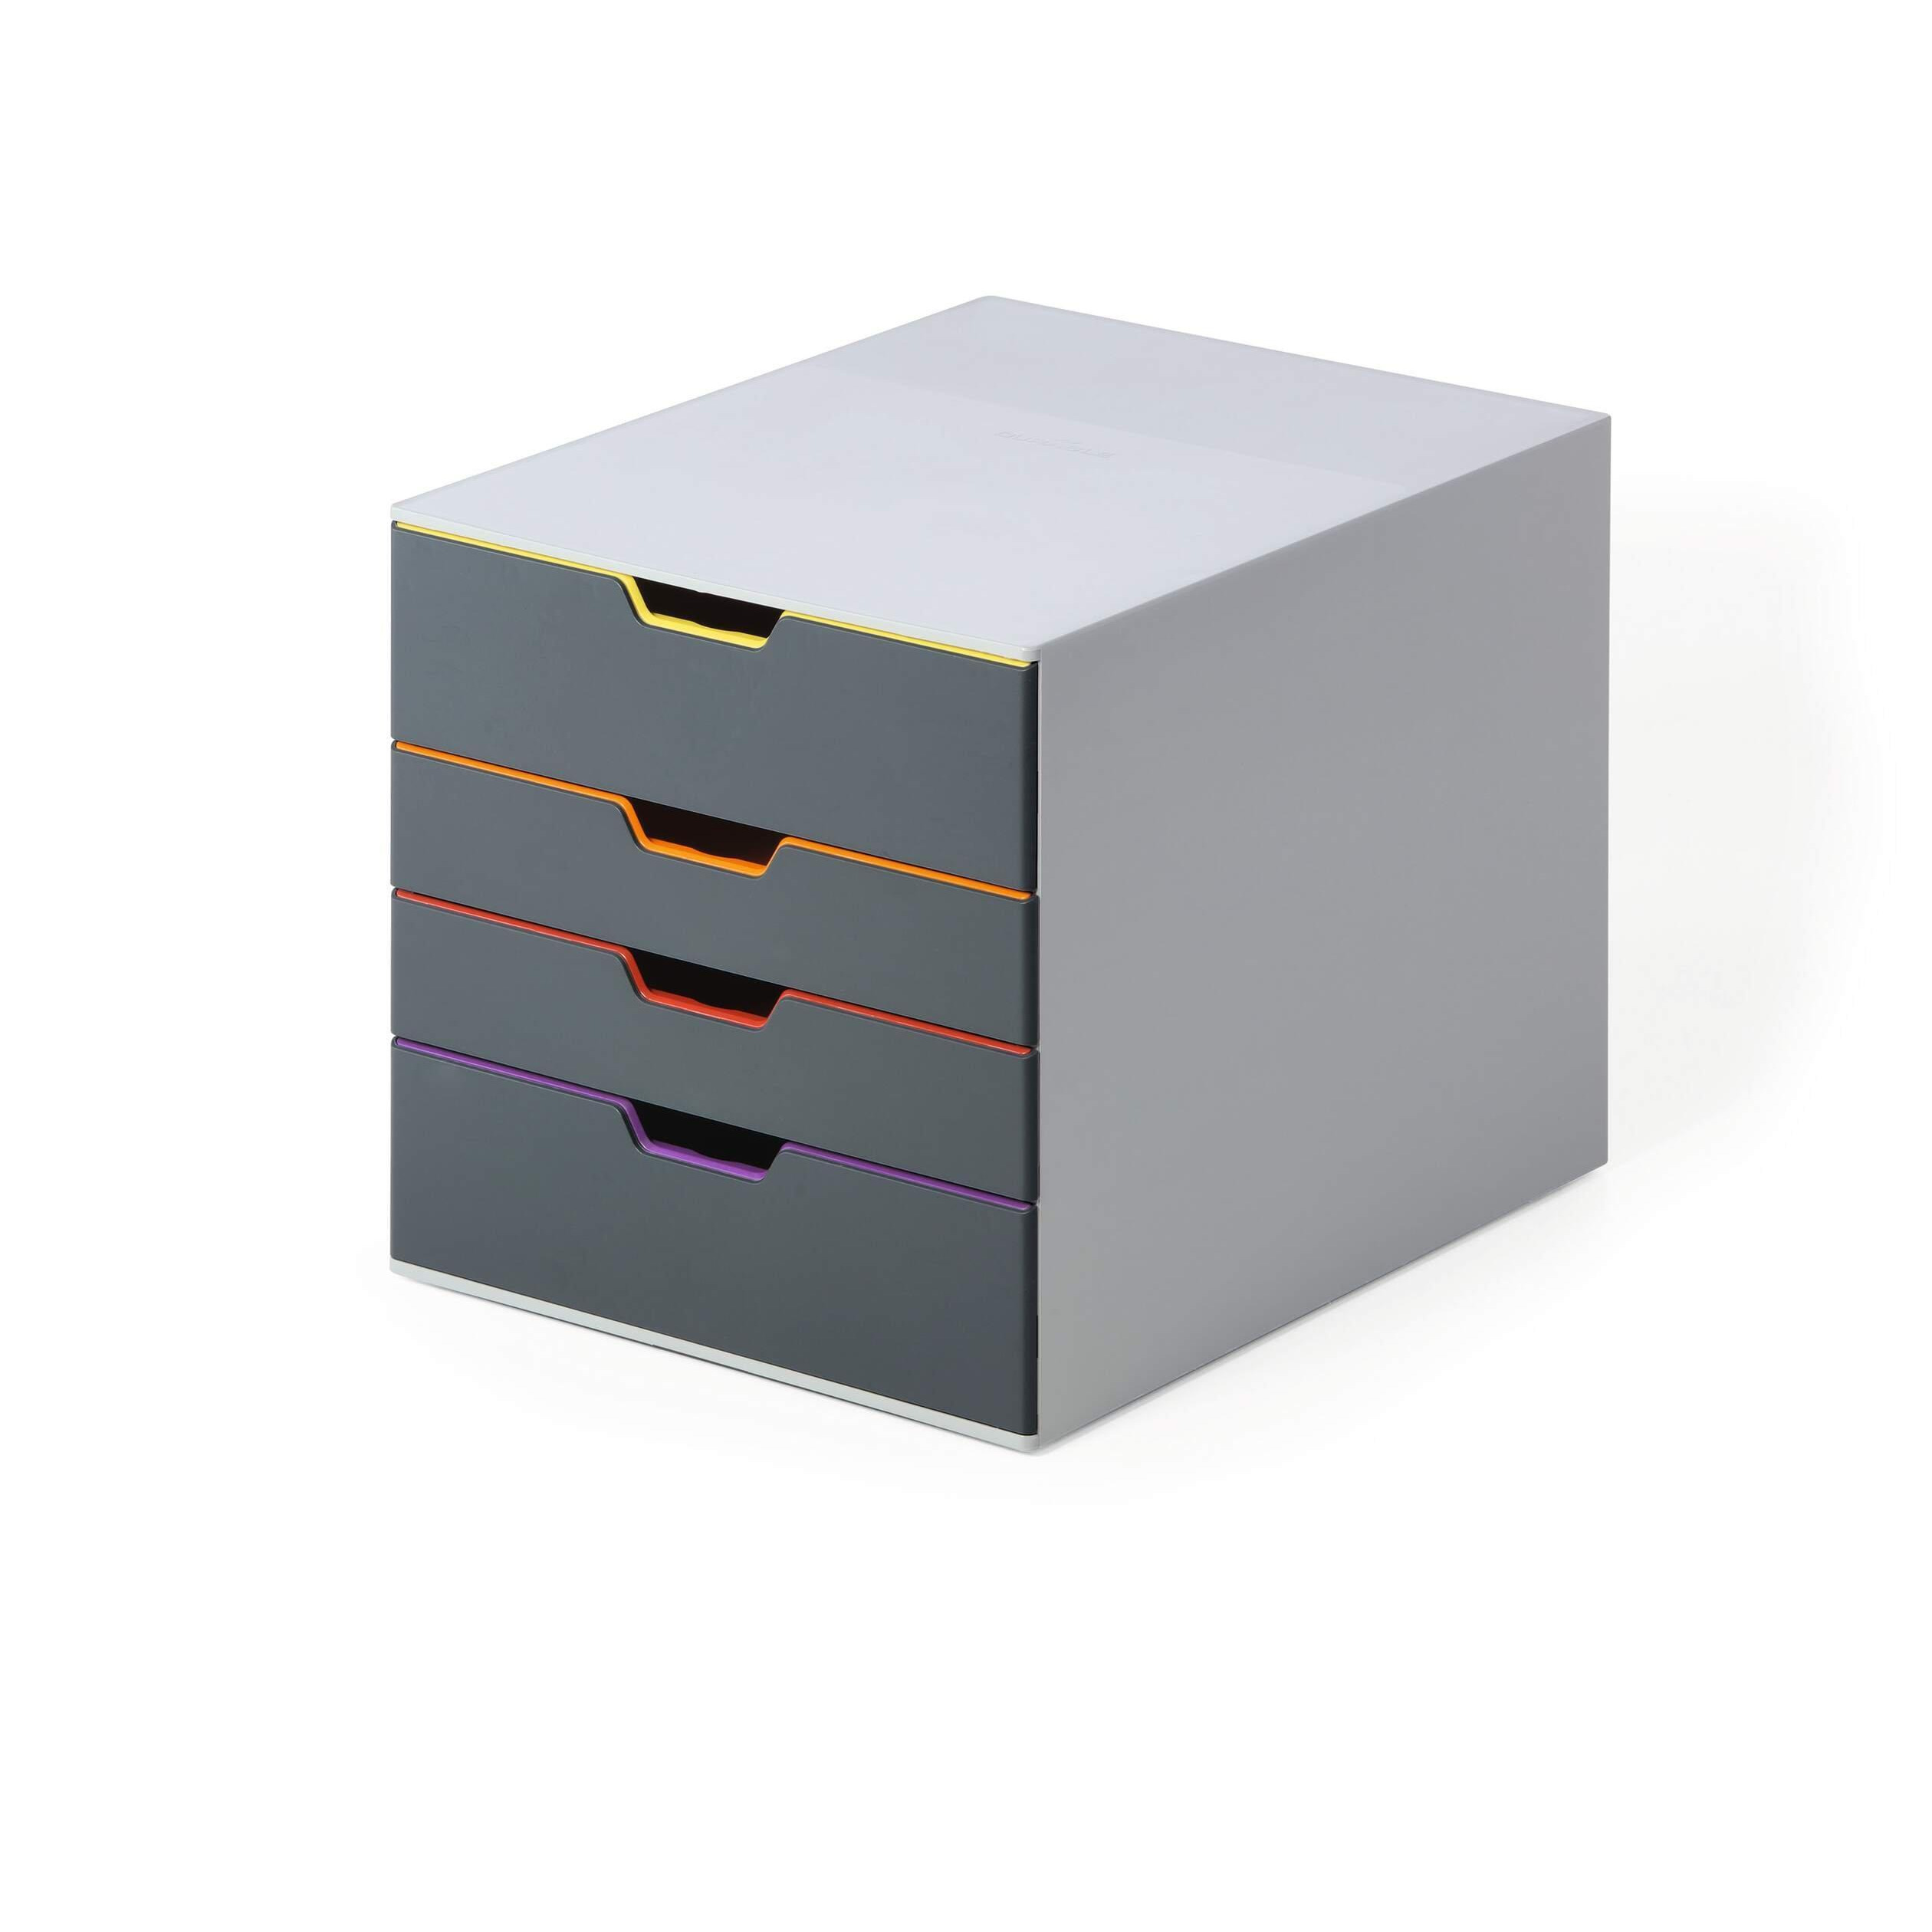 VARICOLOR Desktop Organiser 4 Drawer Colour Coded Modular Storage - A4+ - image 1